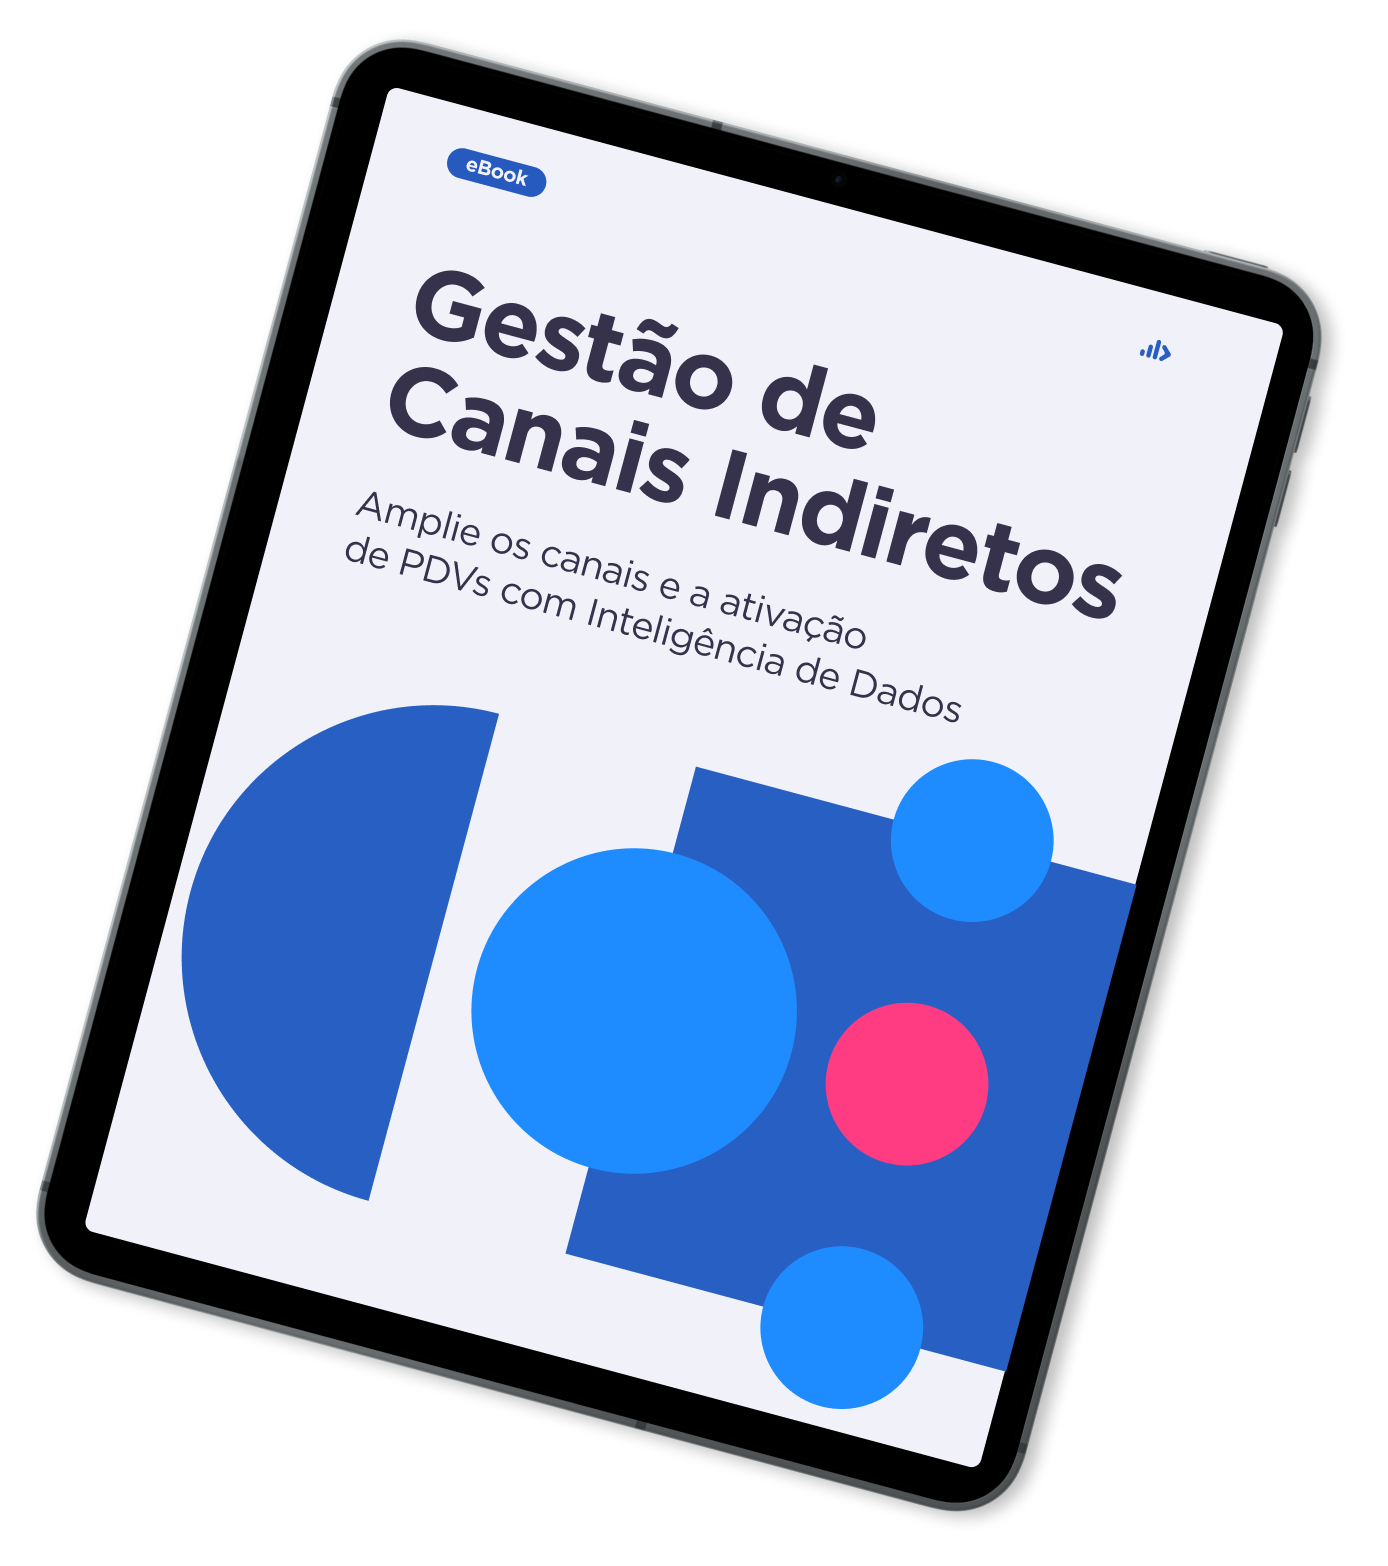 ebook-template-lp-gestao-de-canais-indiretos